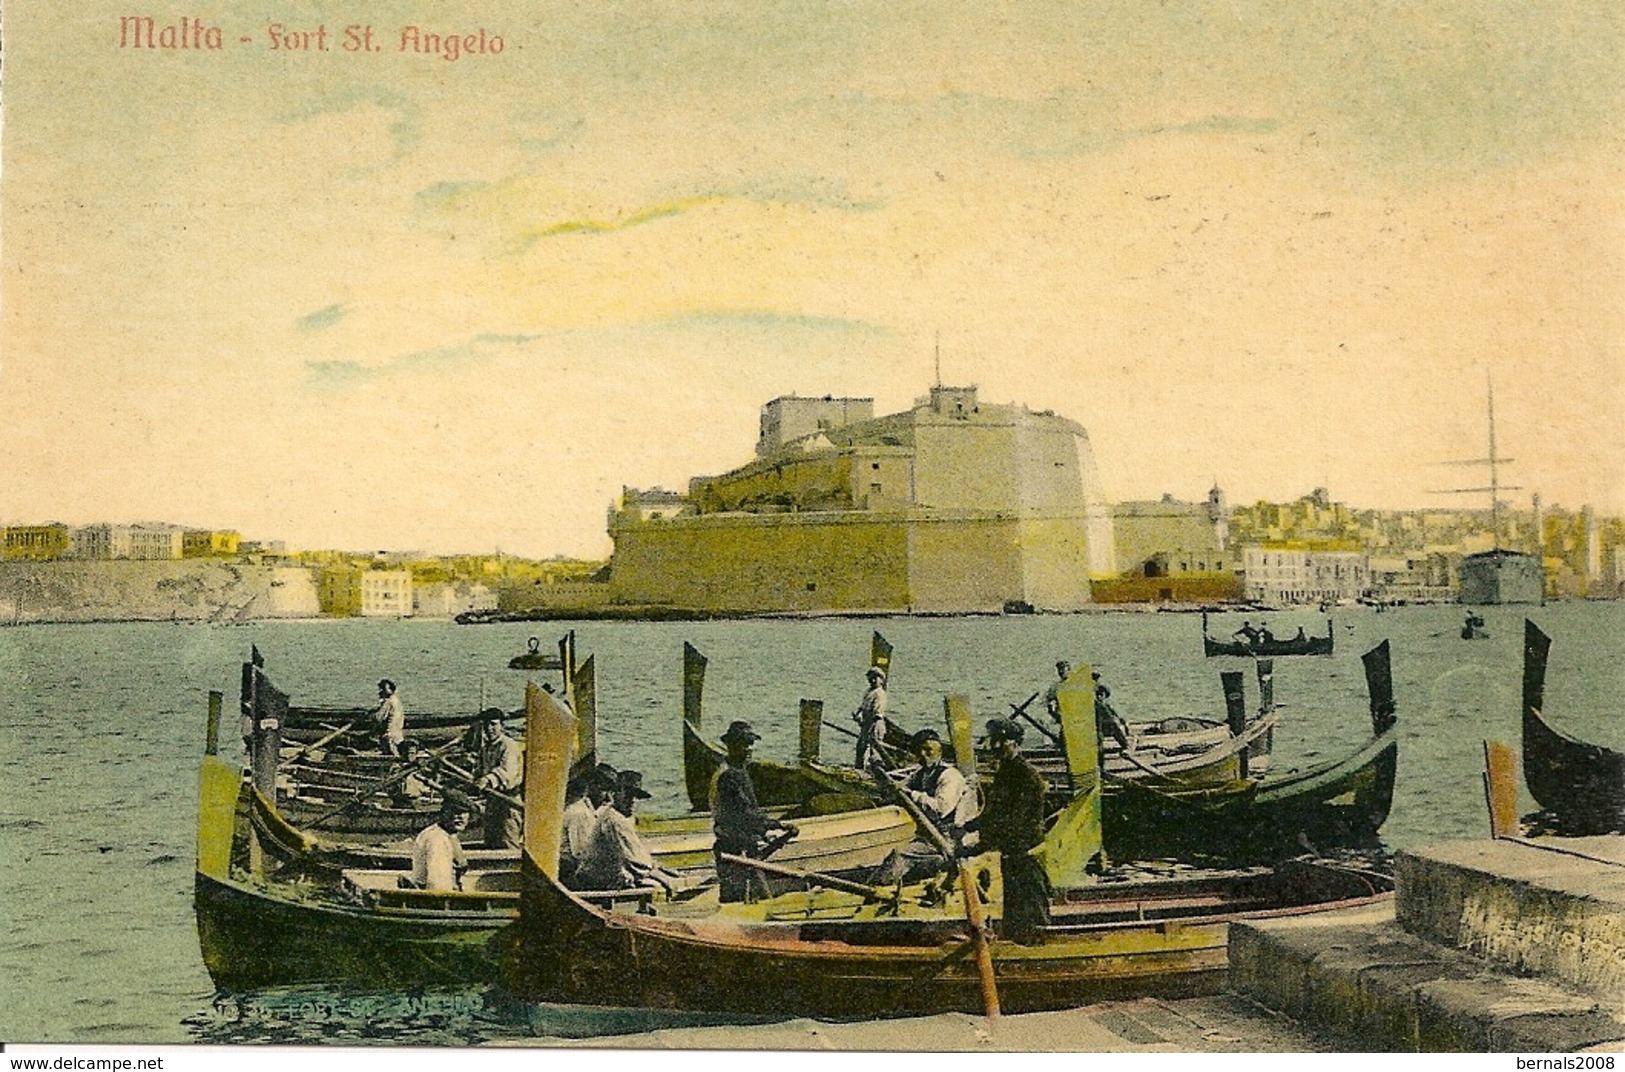 MALTA - Fort.St Angelo - Malta